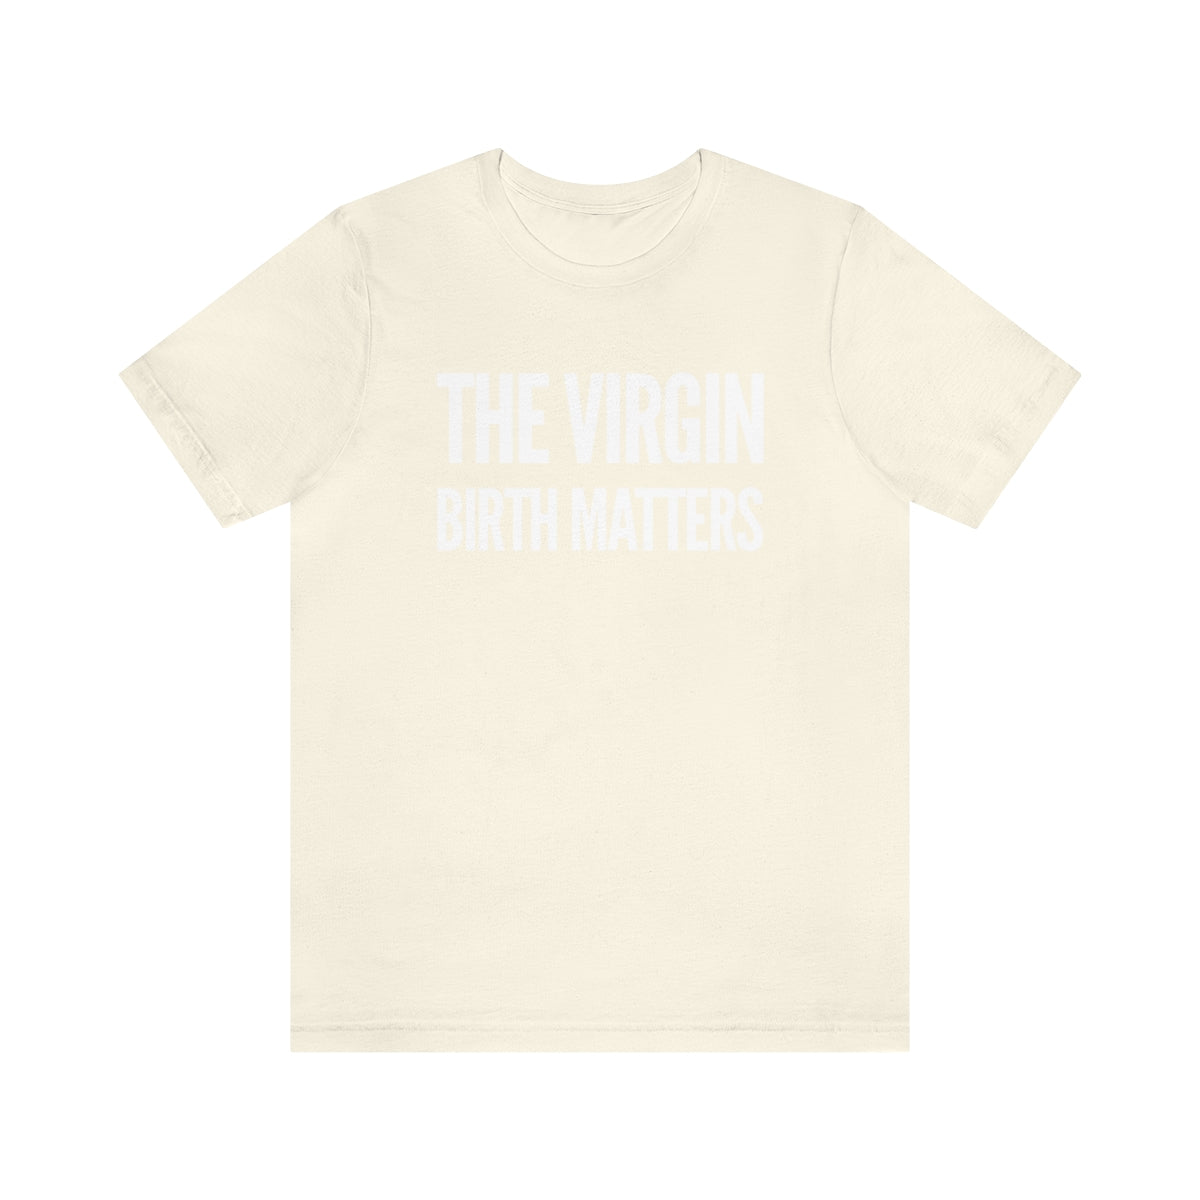 Gospel Affiliated The Virgin Birth Matters Front Print Unisex Jersey Short Sleeve Tee